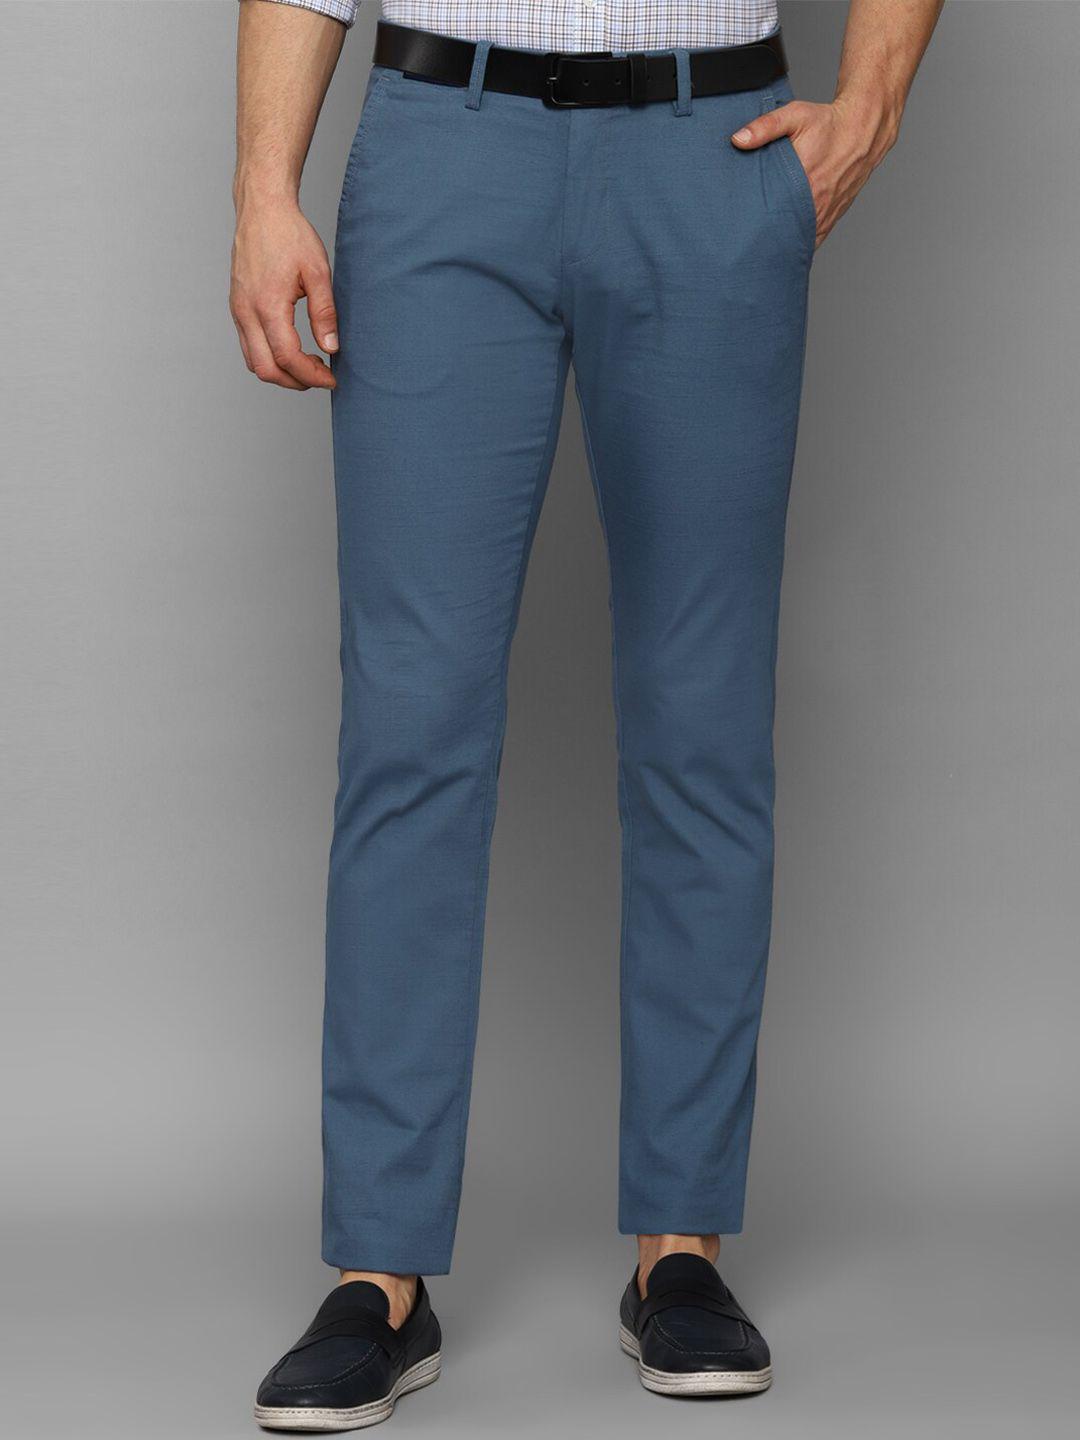 allen solly men blue textured slim fit trousers